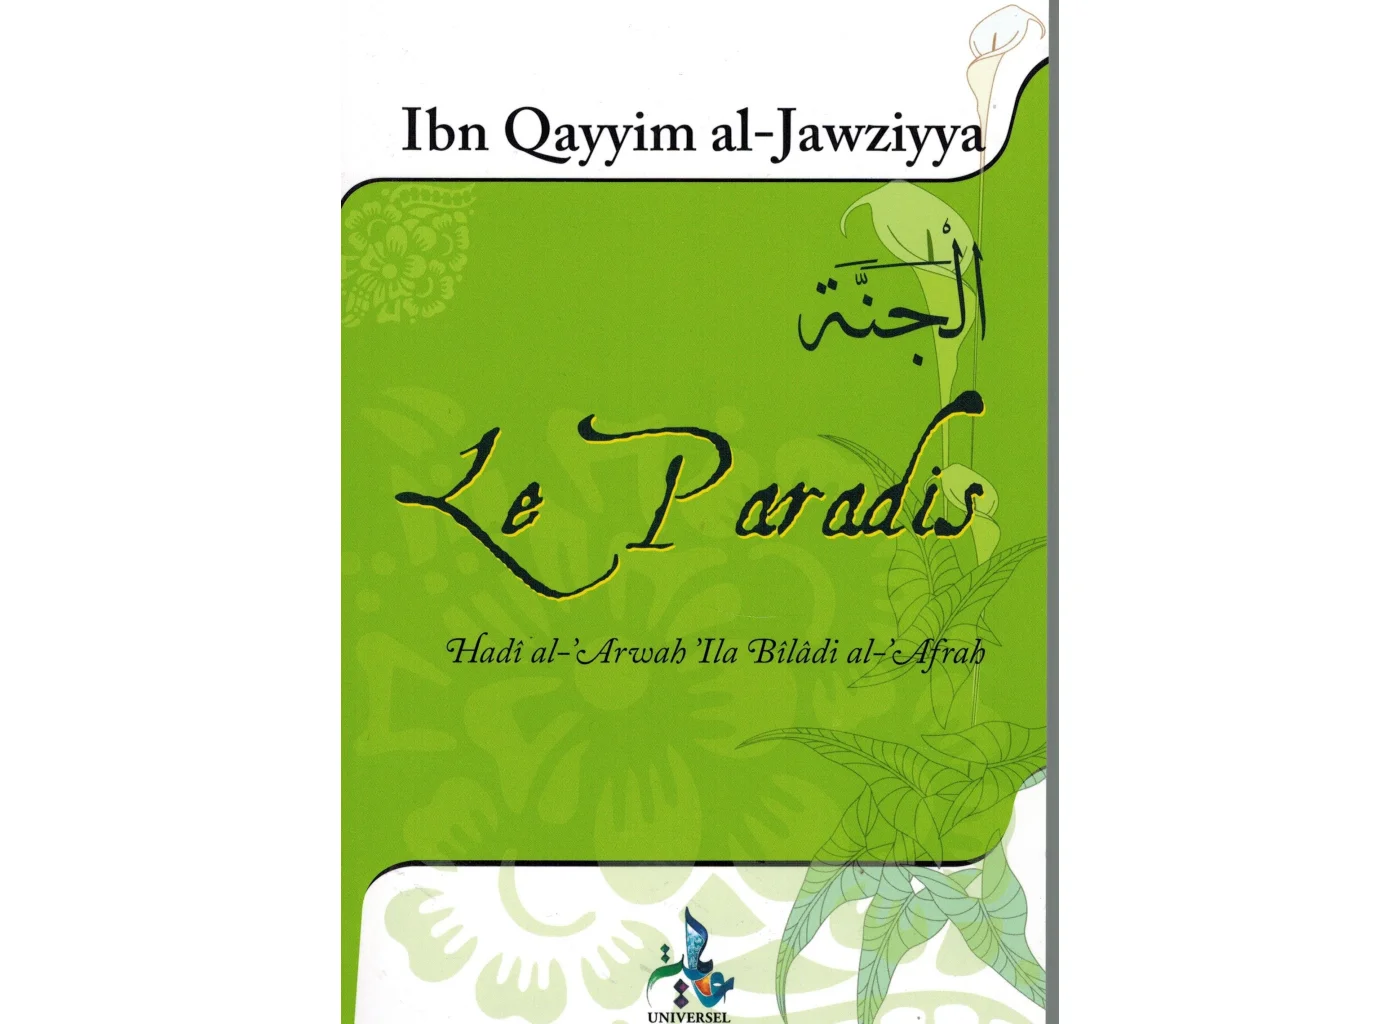 Le paradis de Ibn Qayyim, l’espoir en un espace exempt de souffrance ...